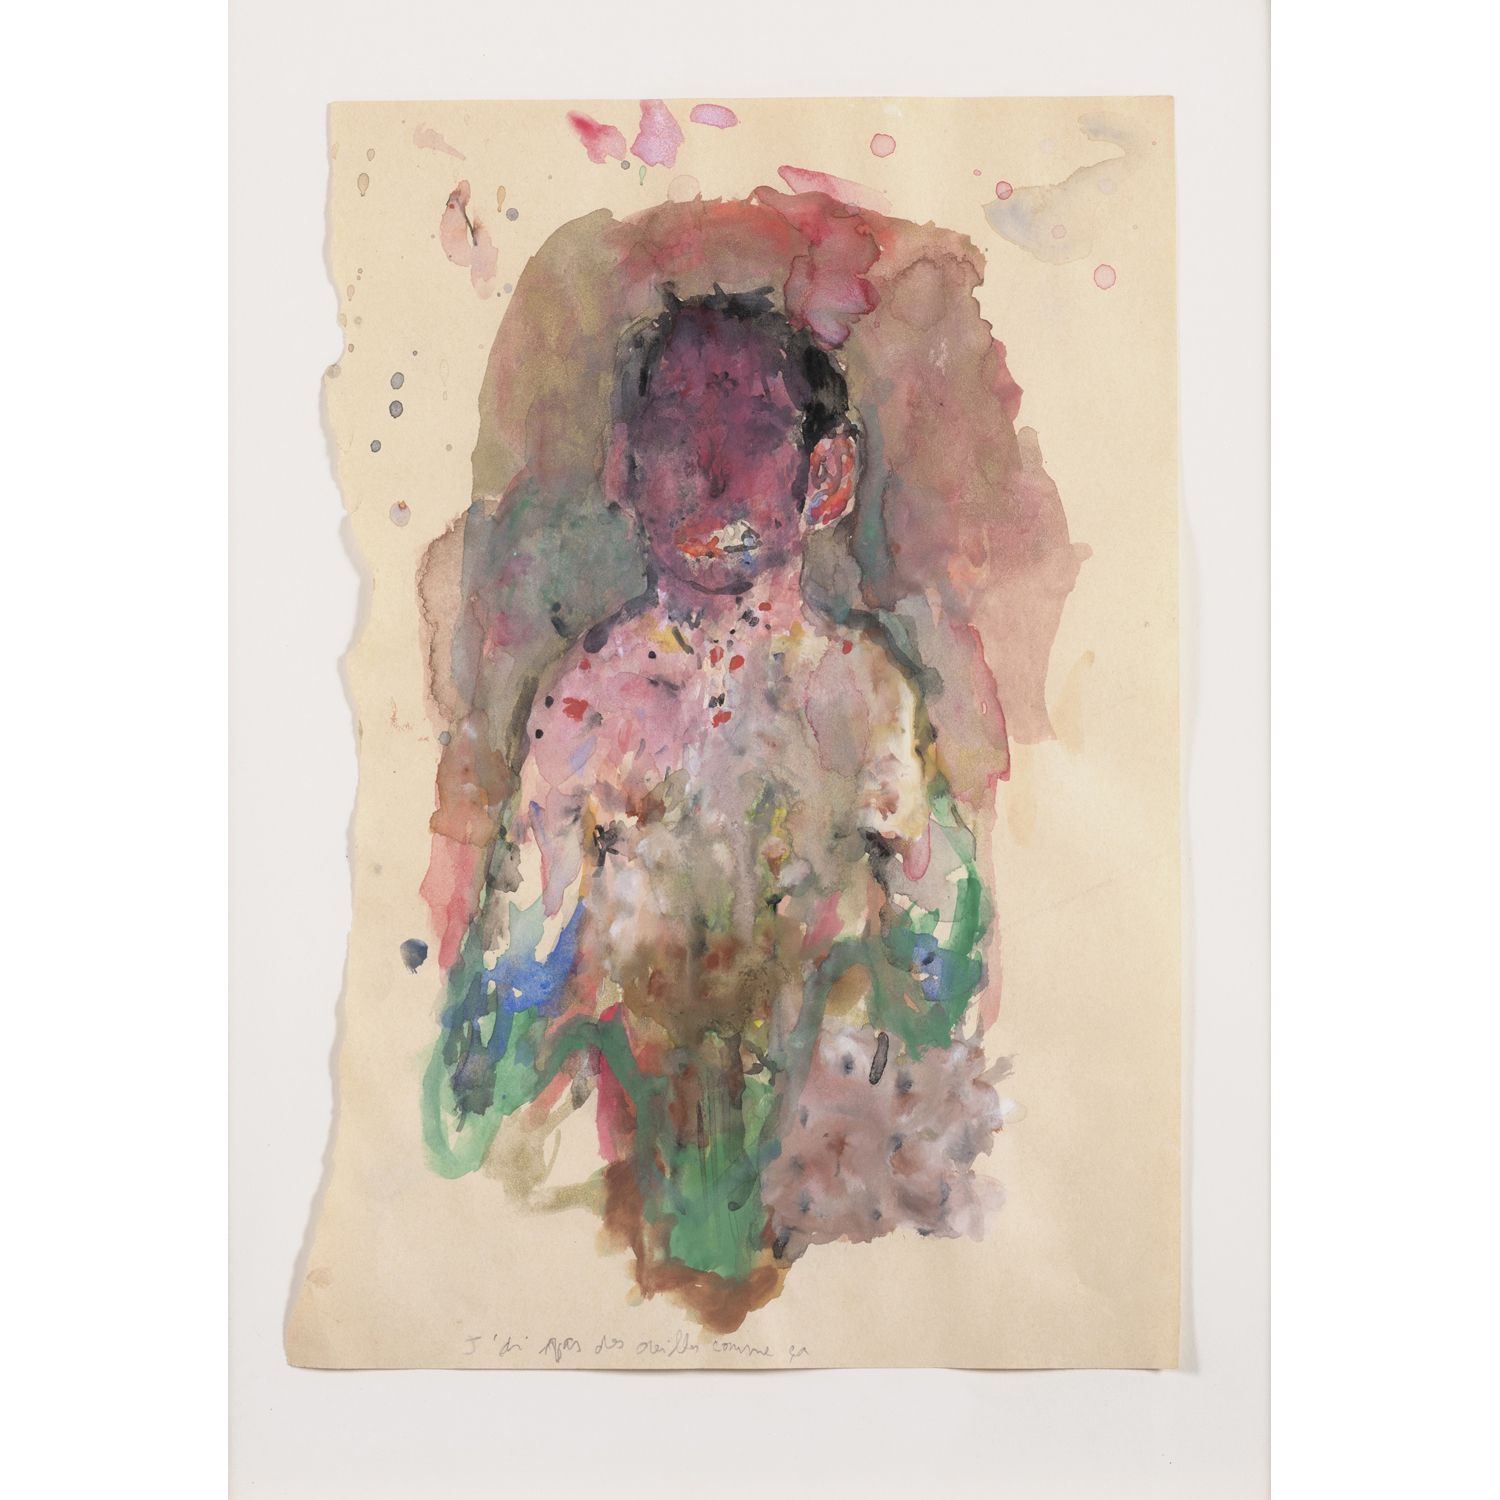 Null 弗朗索瓦-里贝斯(生于1970年)

我没有这样的耳朵

纸上水粉和水彩画

中下部有标题

29 x 20 厘米

出处: - 克劳迪娜-帕皮翁画廊&hellip;